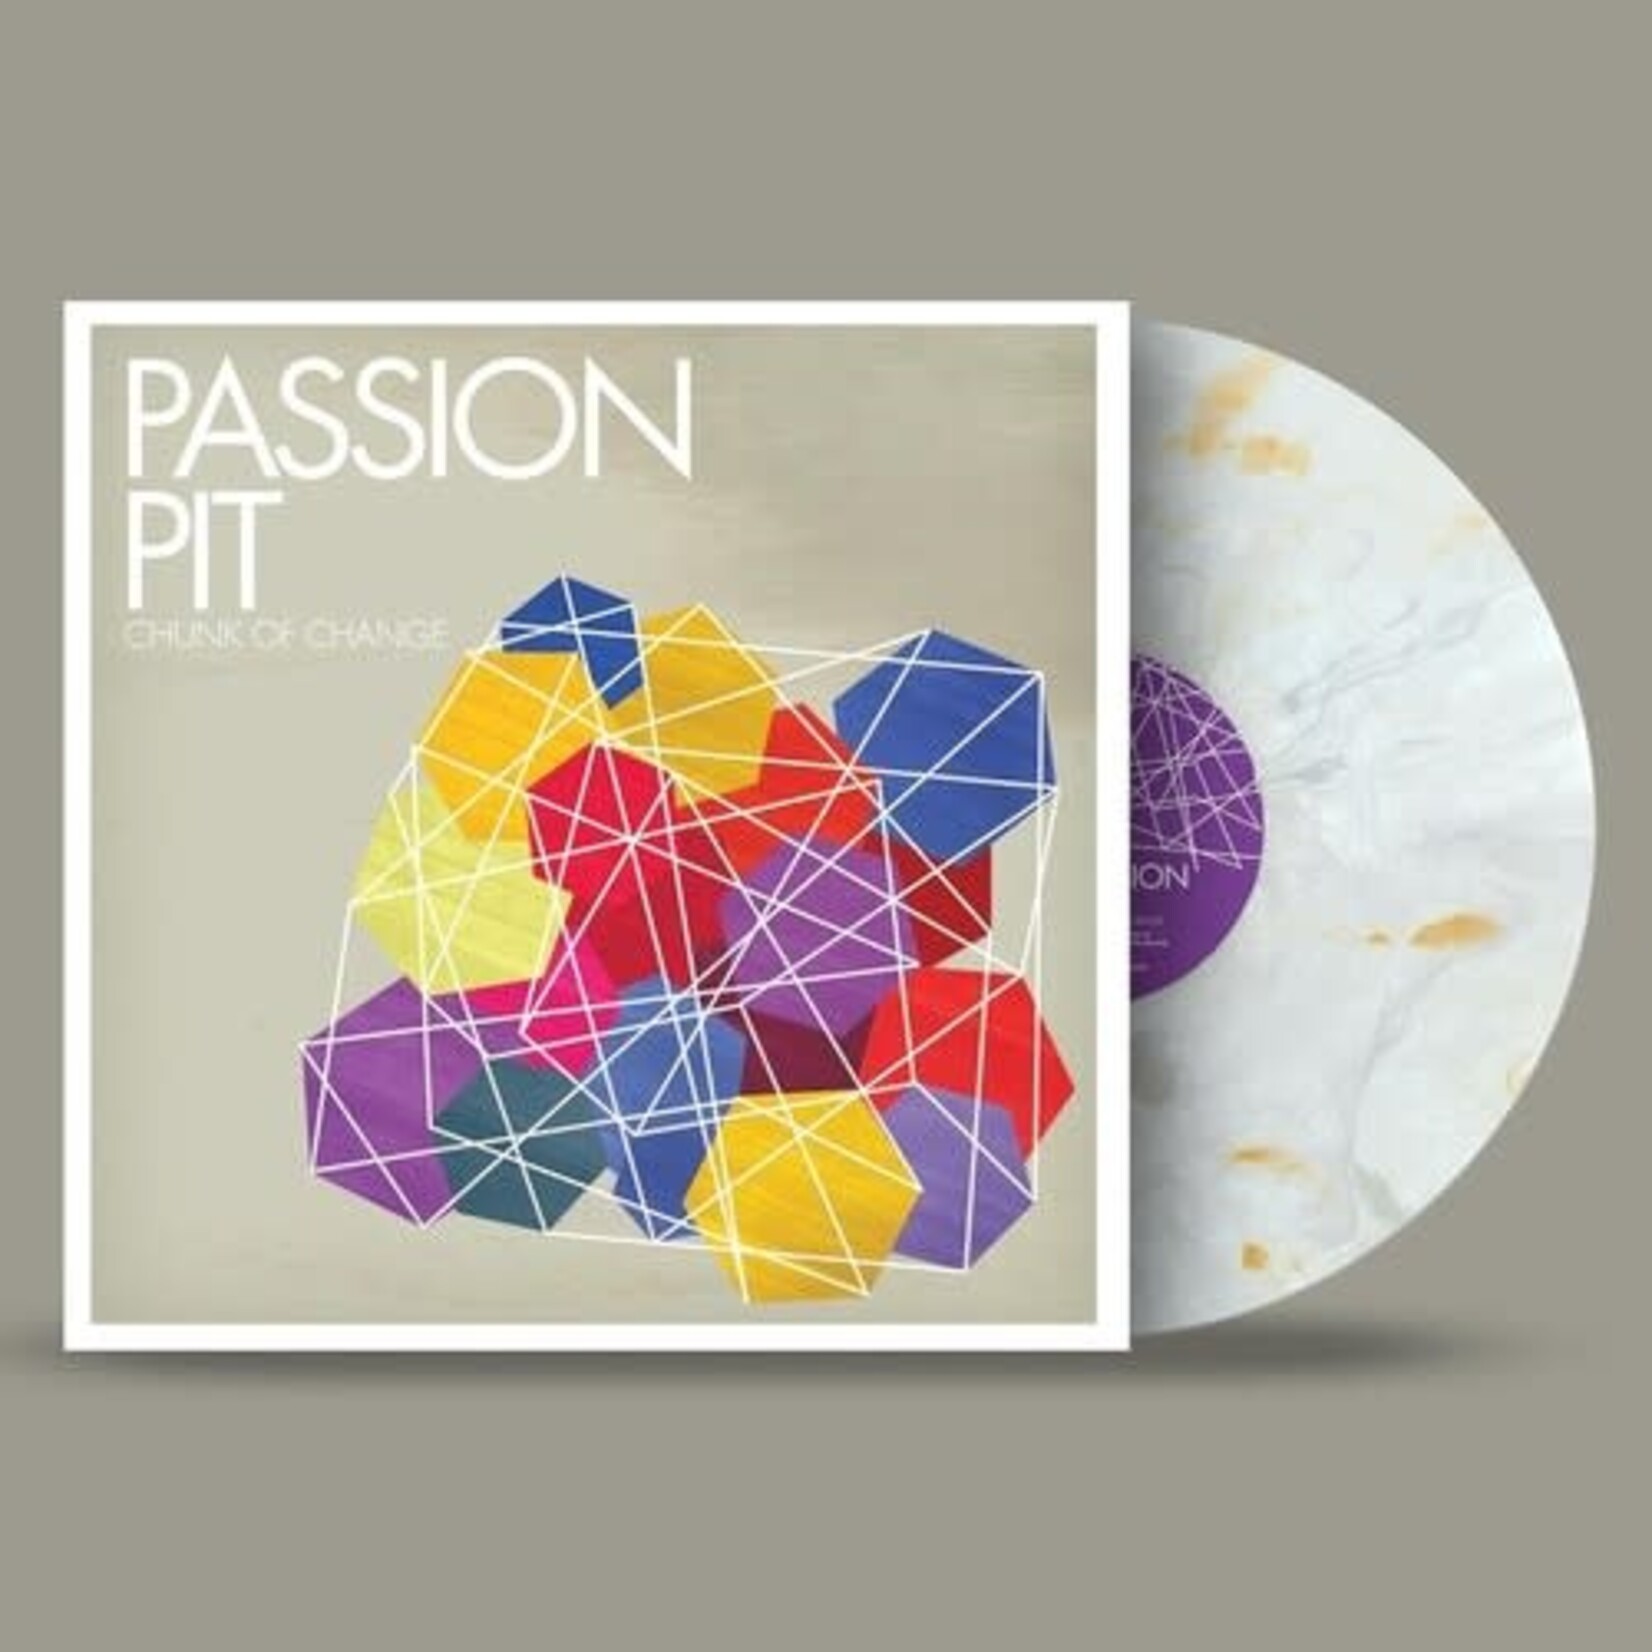 [New] Passion Pit - Chunk Of Change (15th Anniversary Edition, colored vinyl, remastered w/bonus)